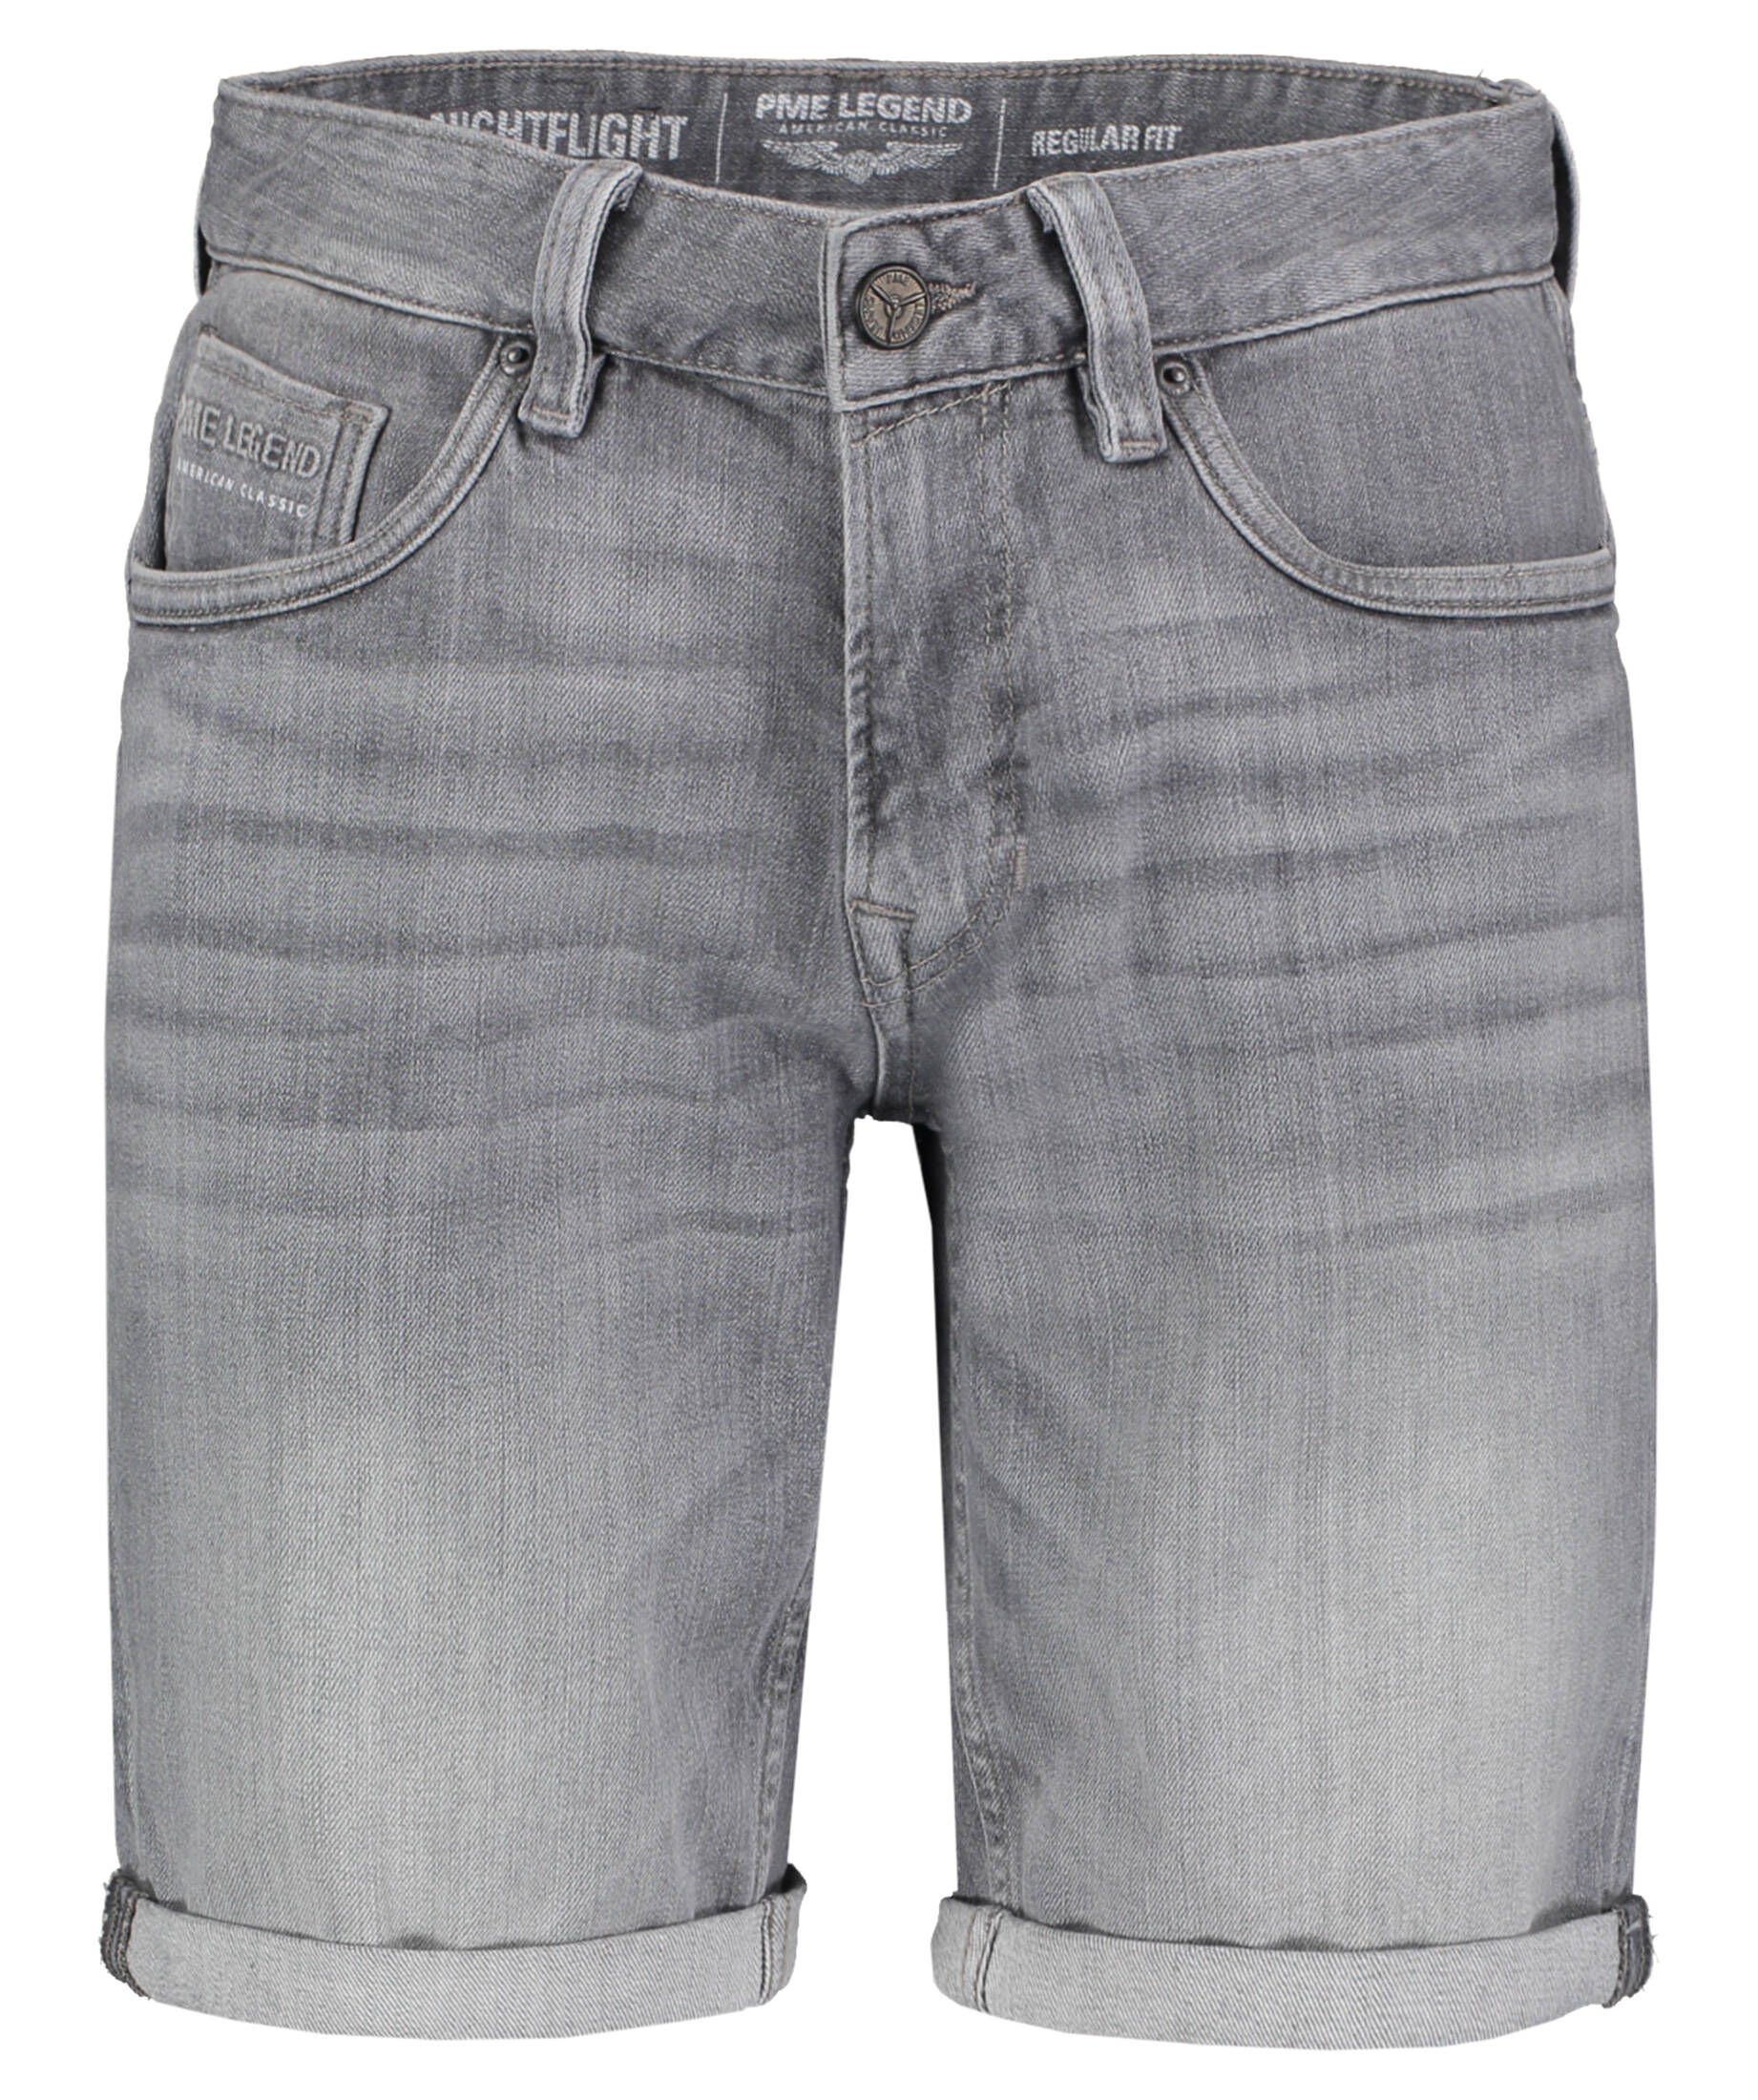 PME LEGEND Jeansshorts Herren Jeanshorts NIGHTFLIGHT Regular Fit silber (12)